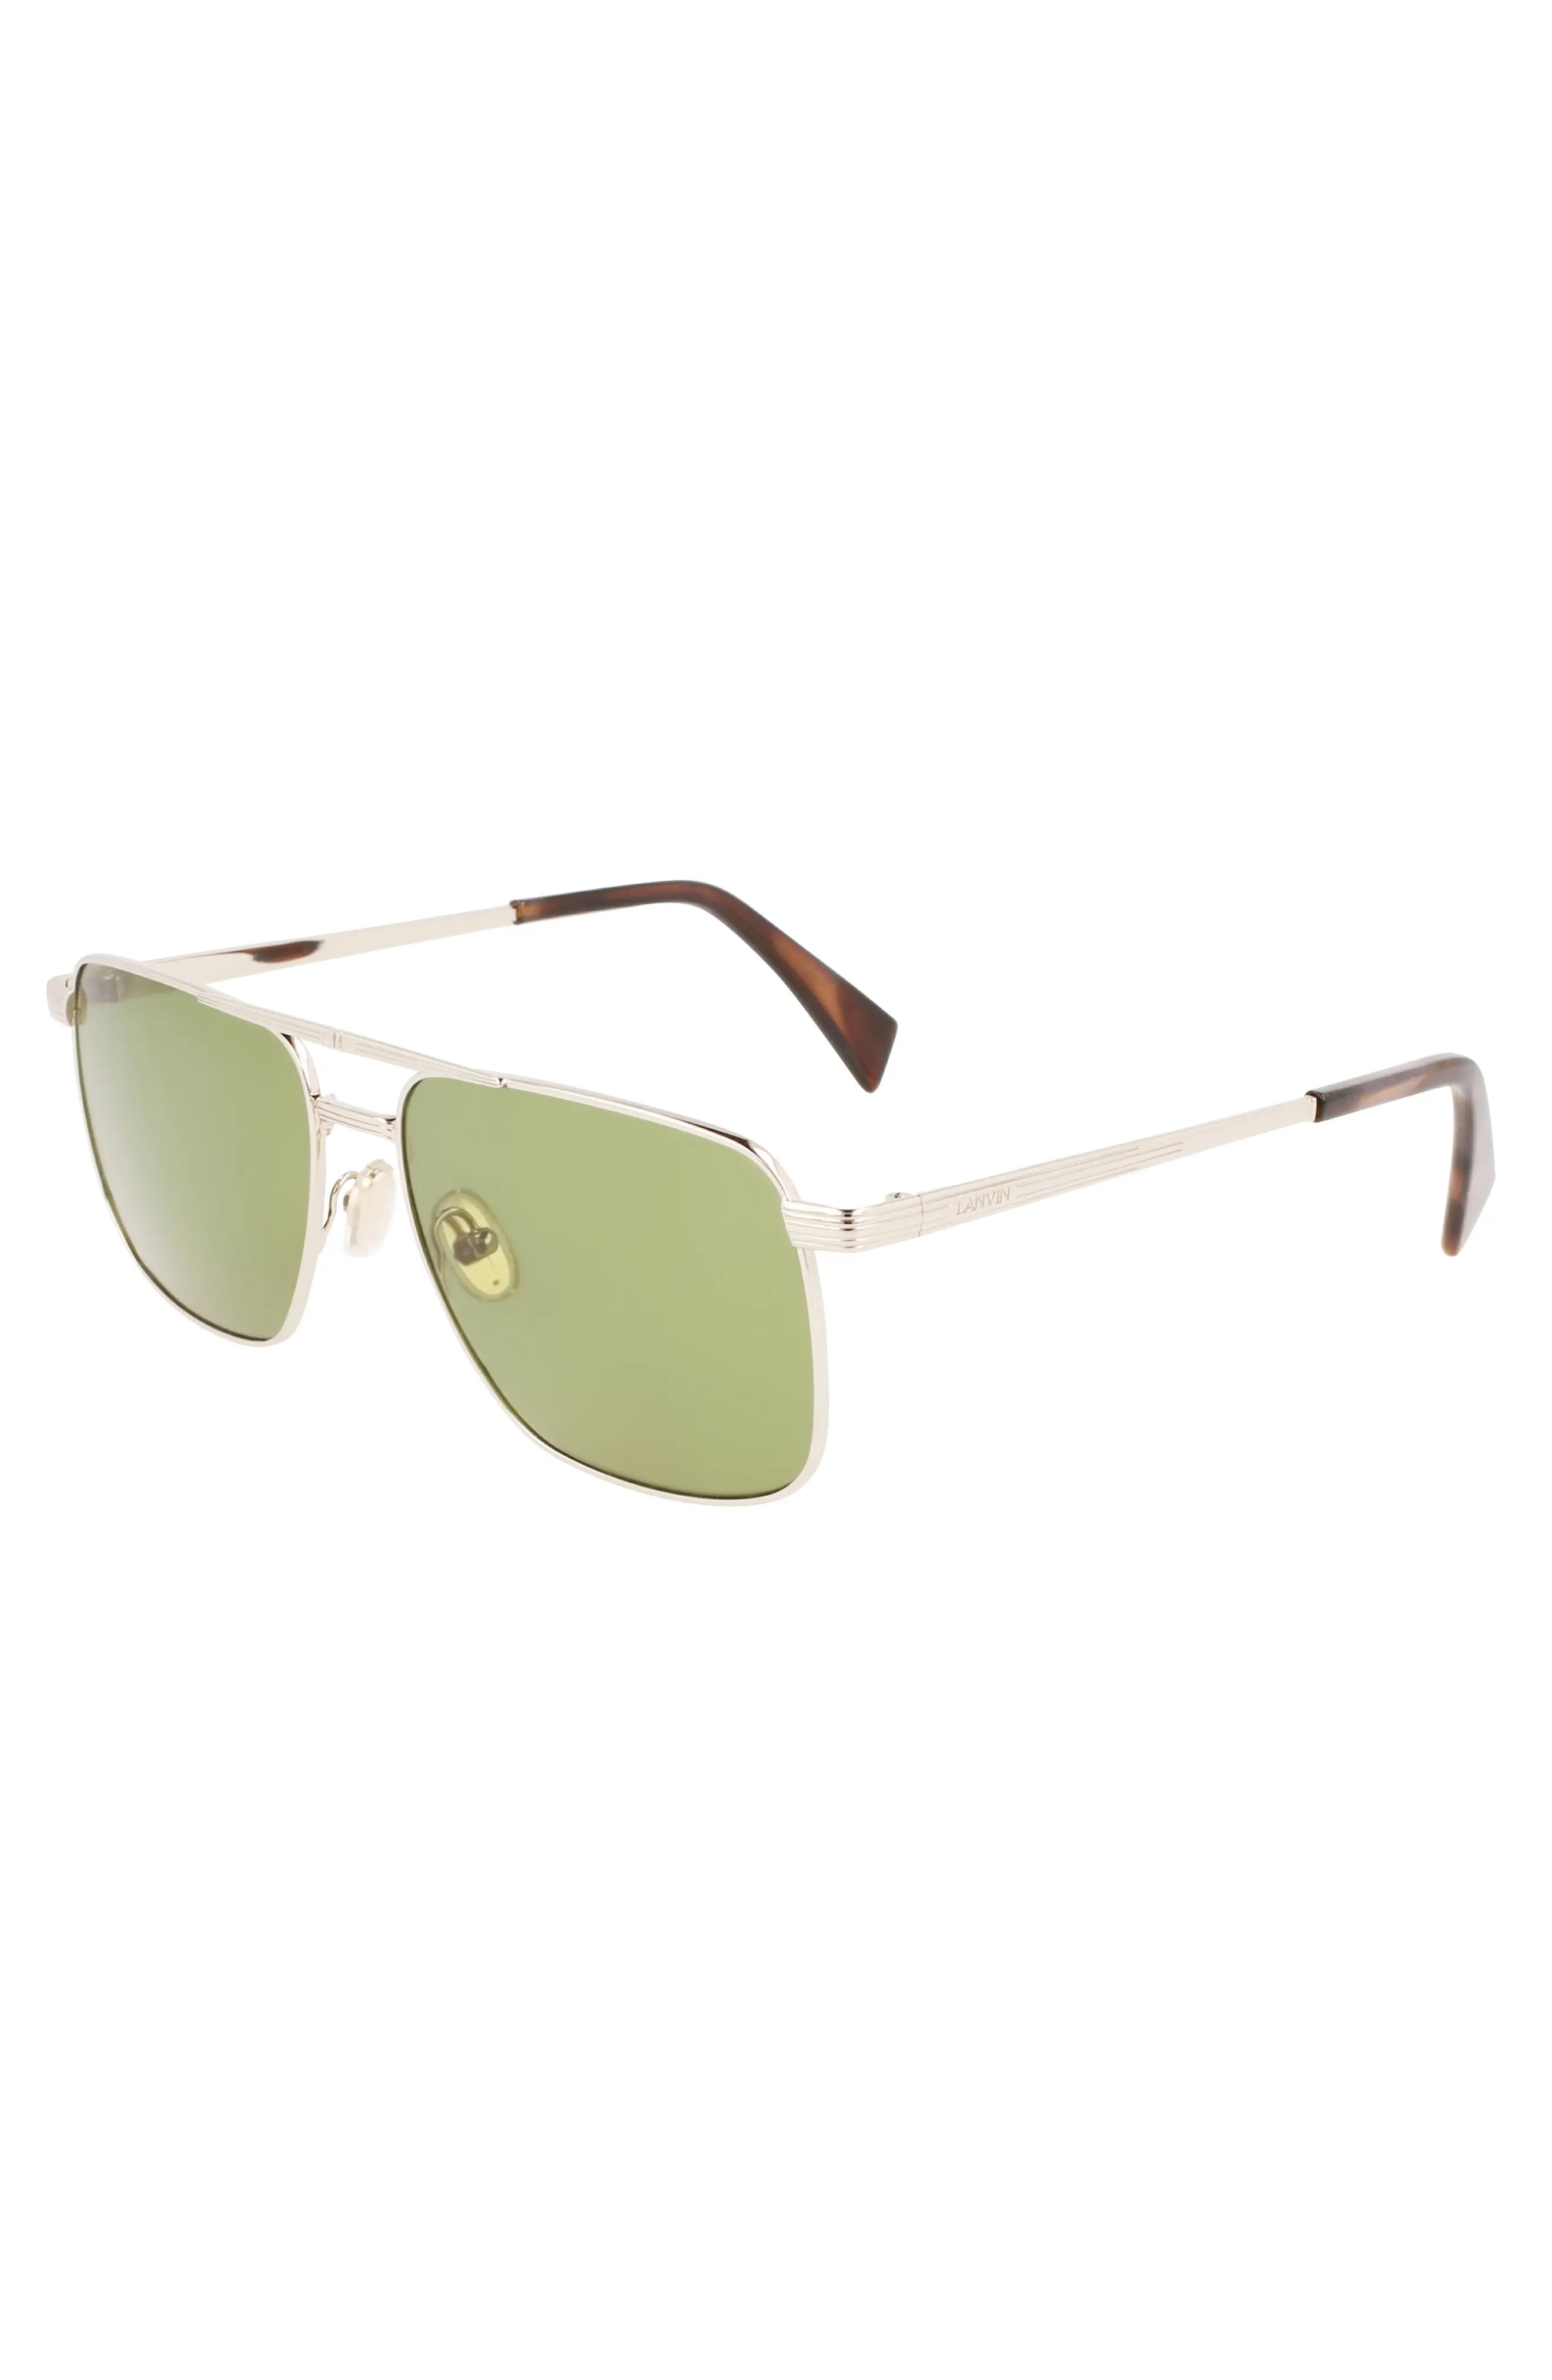 JL 58mm Rectangular Sunglasses in Gold /Green - 2